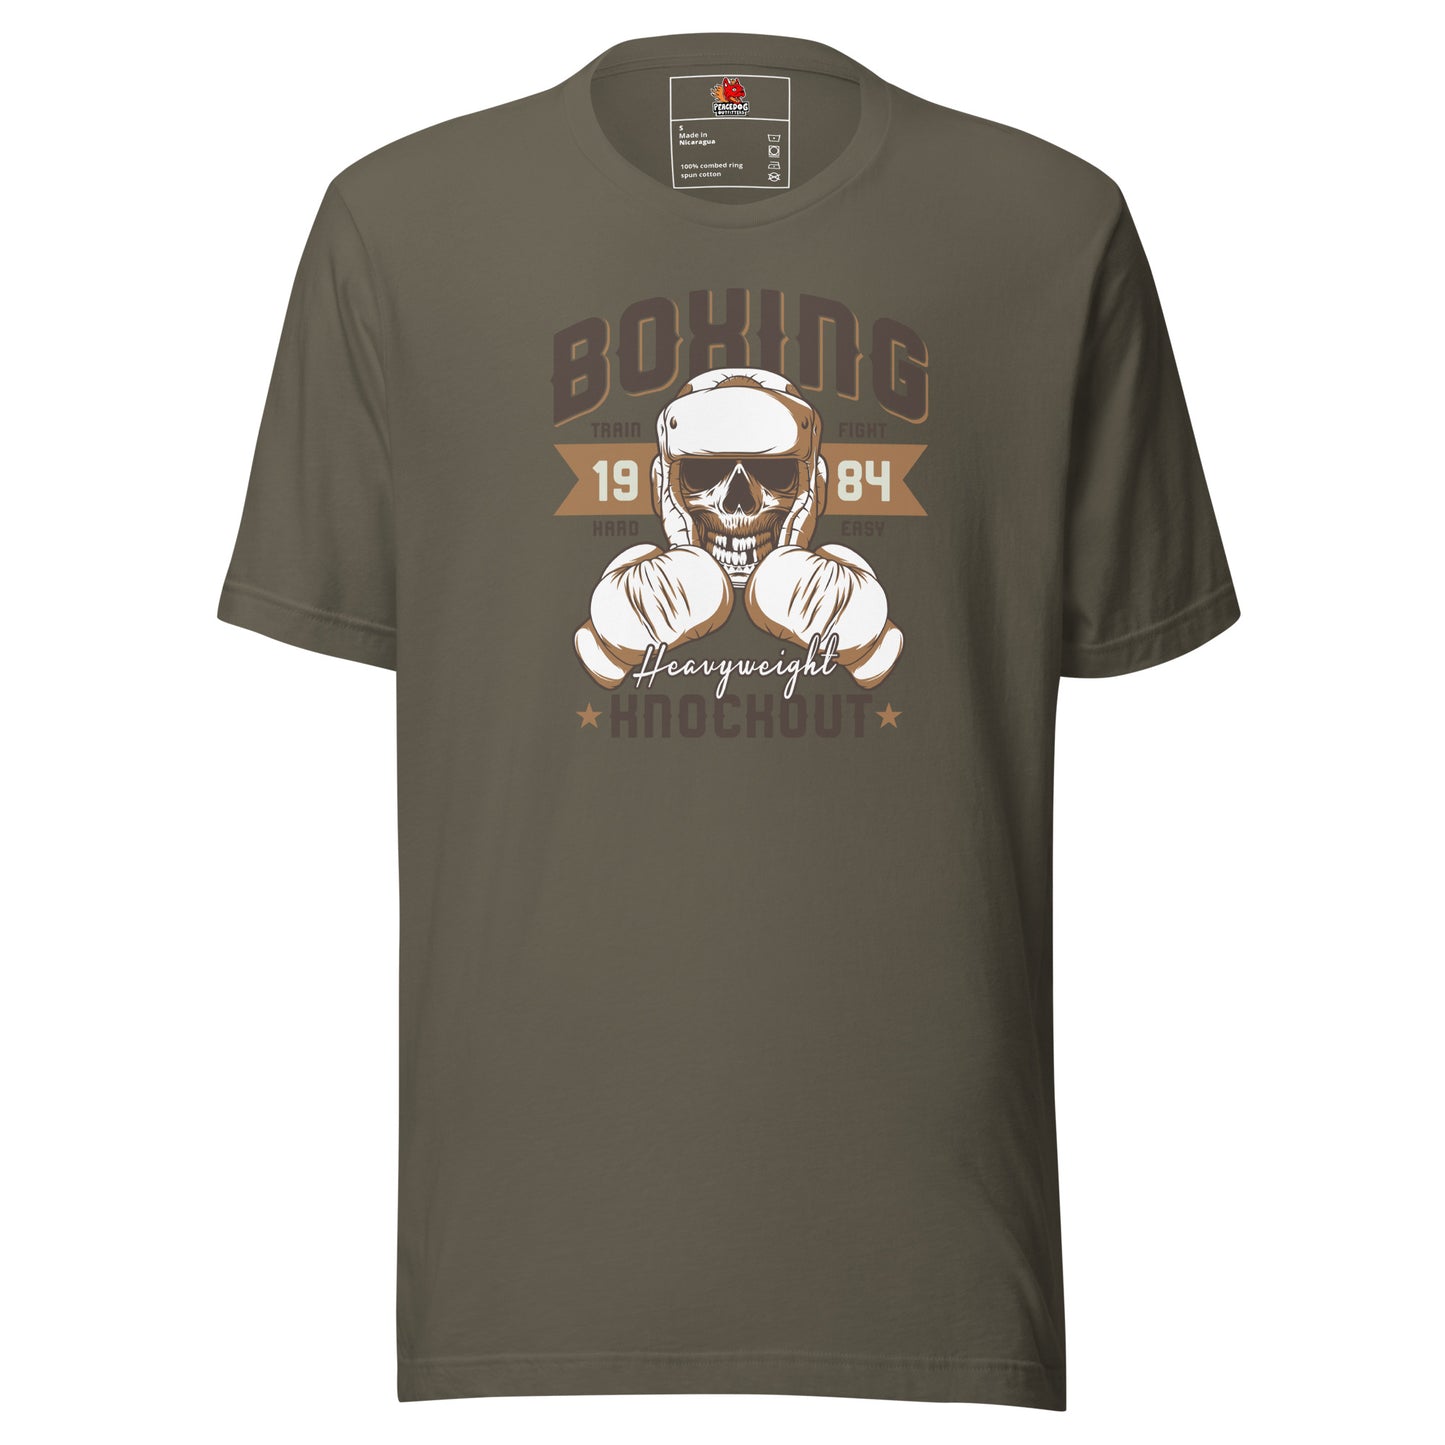 Boxing Knockout Skull T-shirt